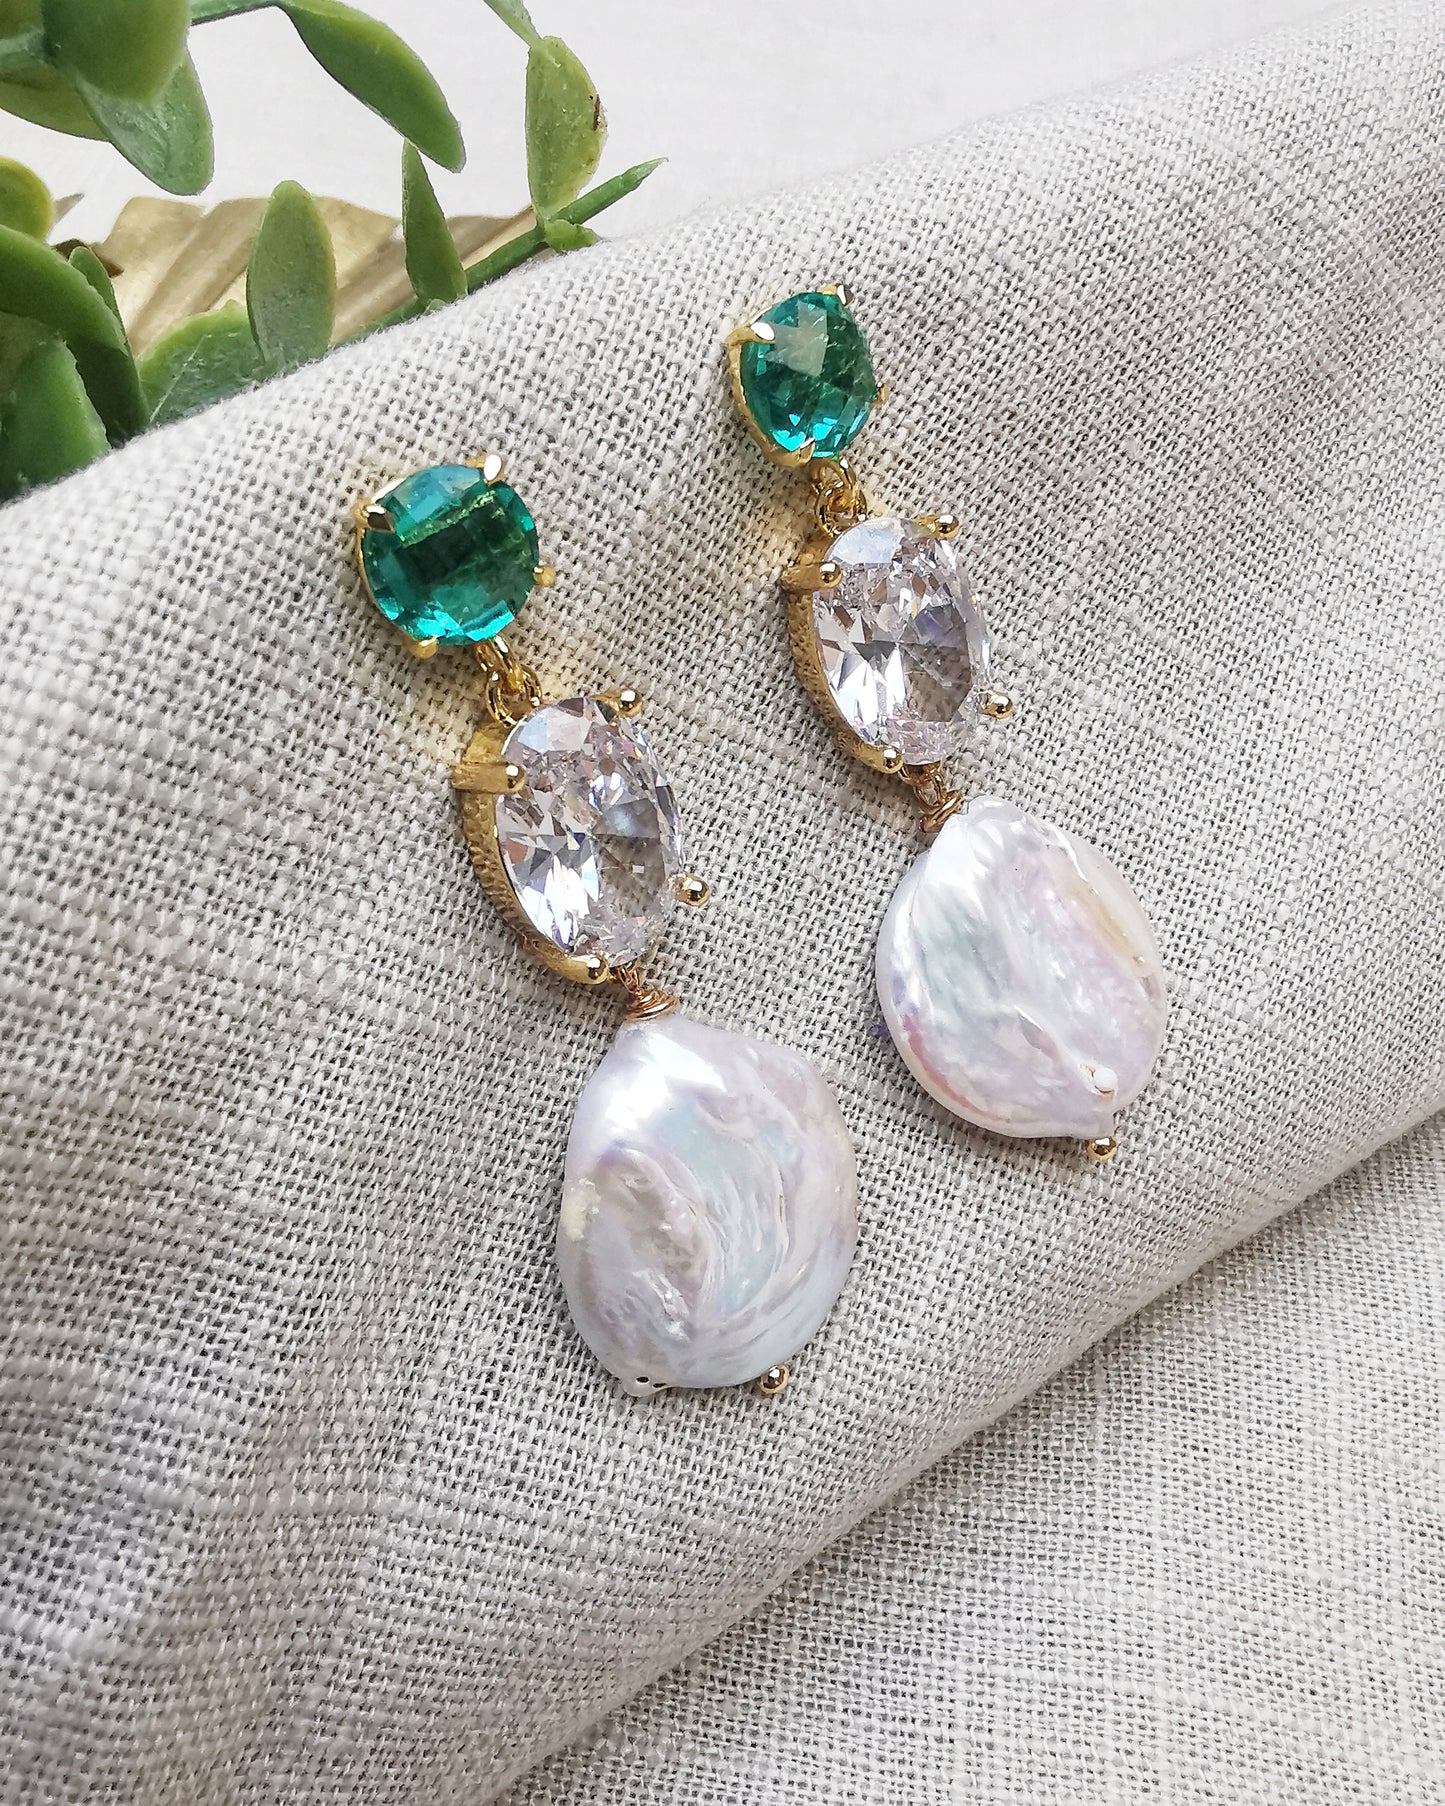 Lauren || Freshwater Pearl + Gemstones Statement Earrings - LIMITED EDITION